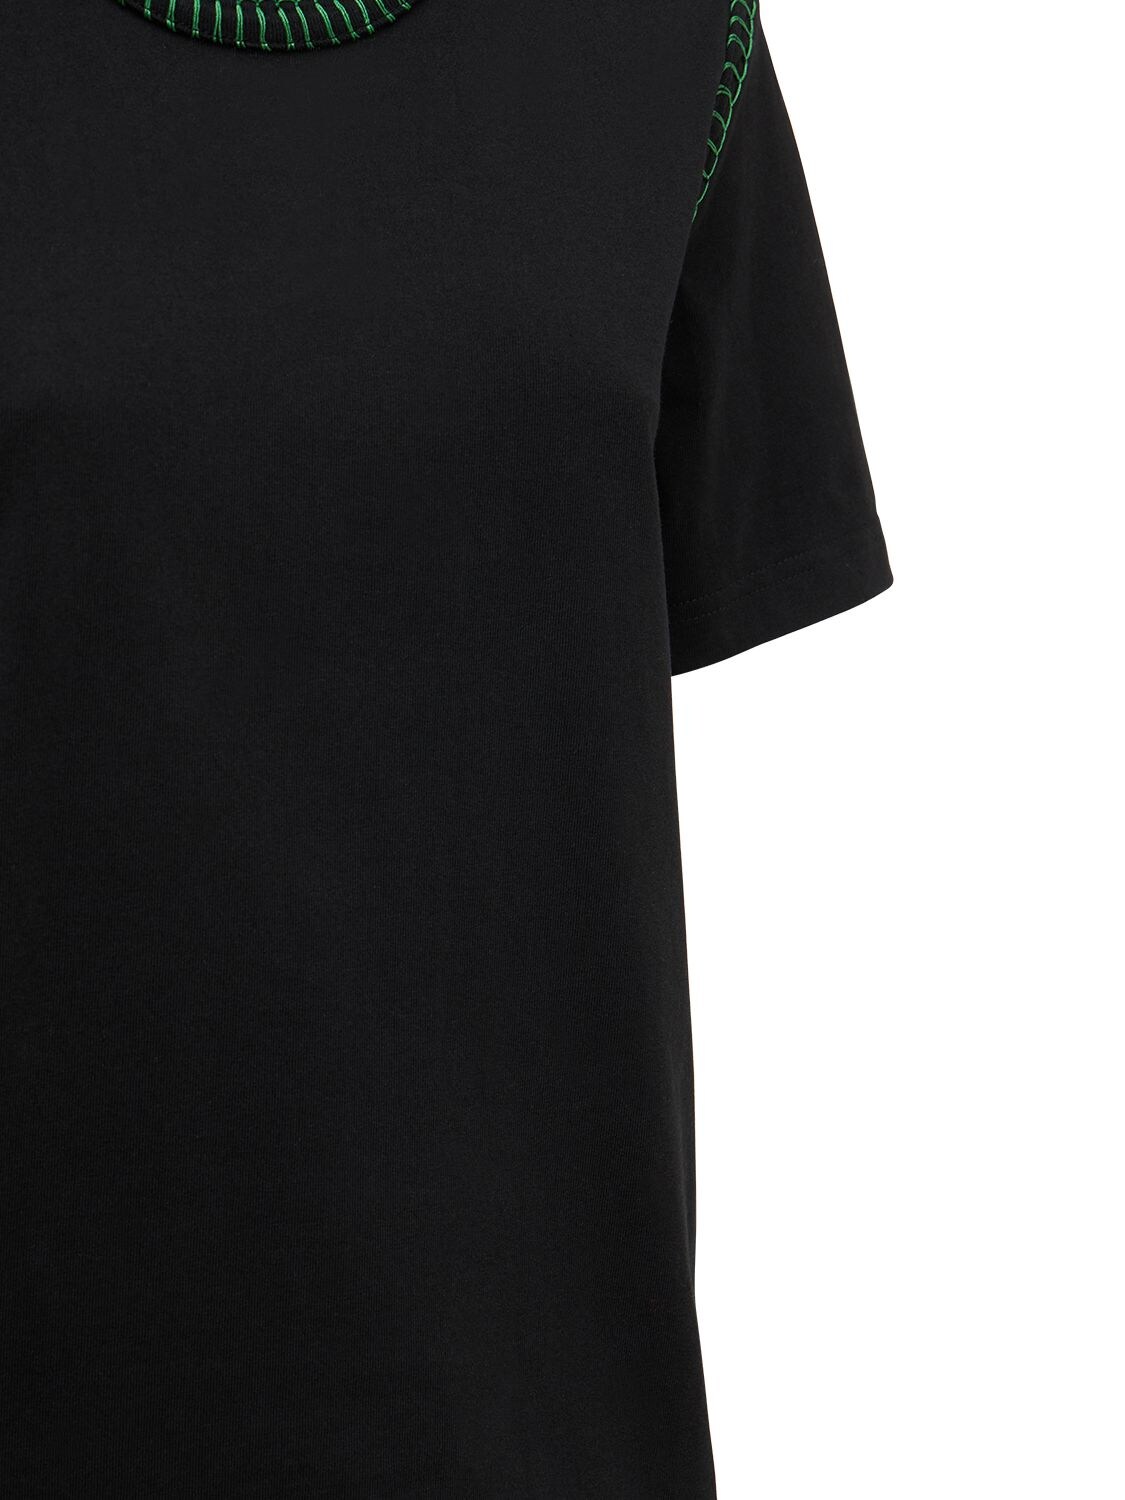 BOTTEGA VENETA: Overlock t-shirt - Black  Bottega Veneta t-shirt  690713V1P70 online at